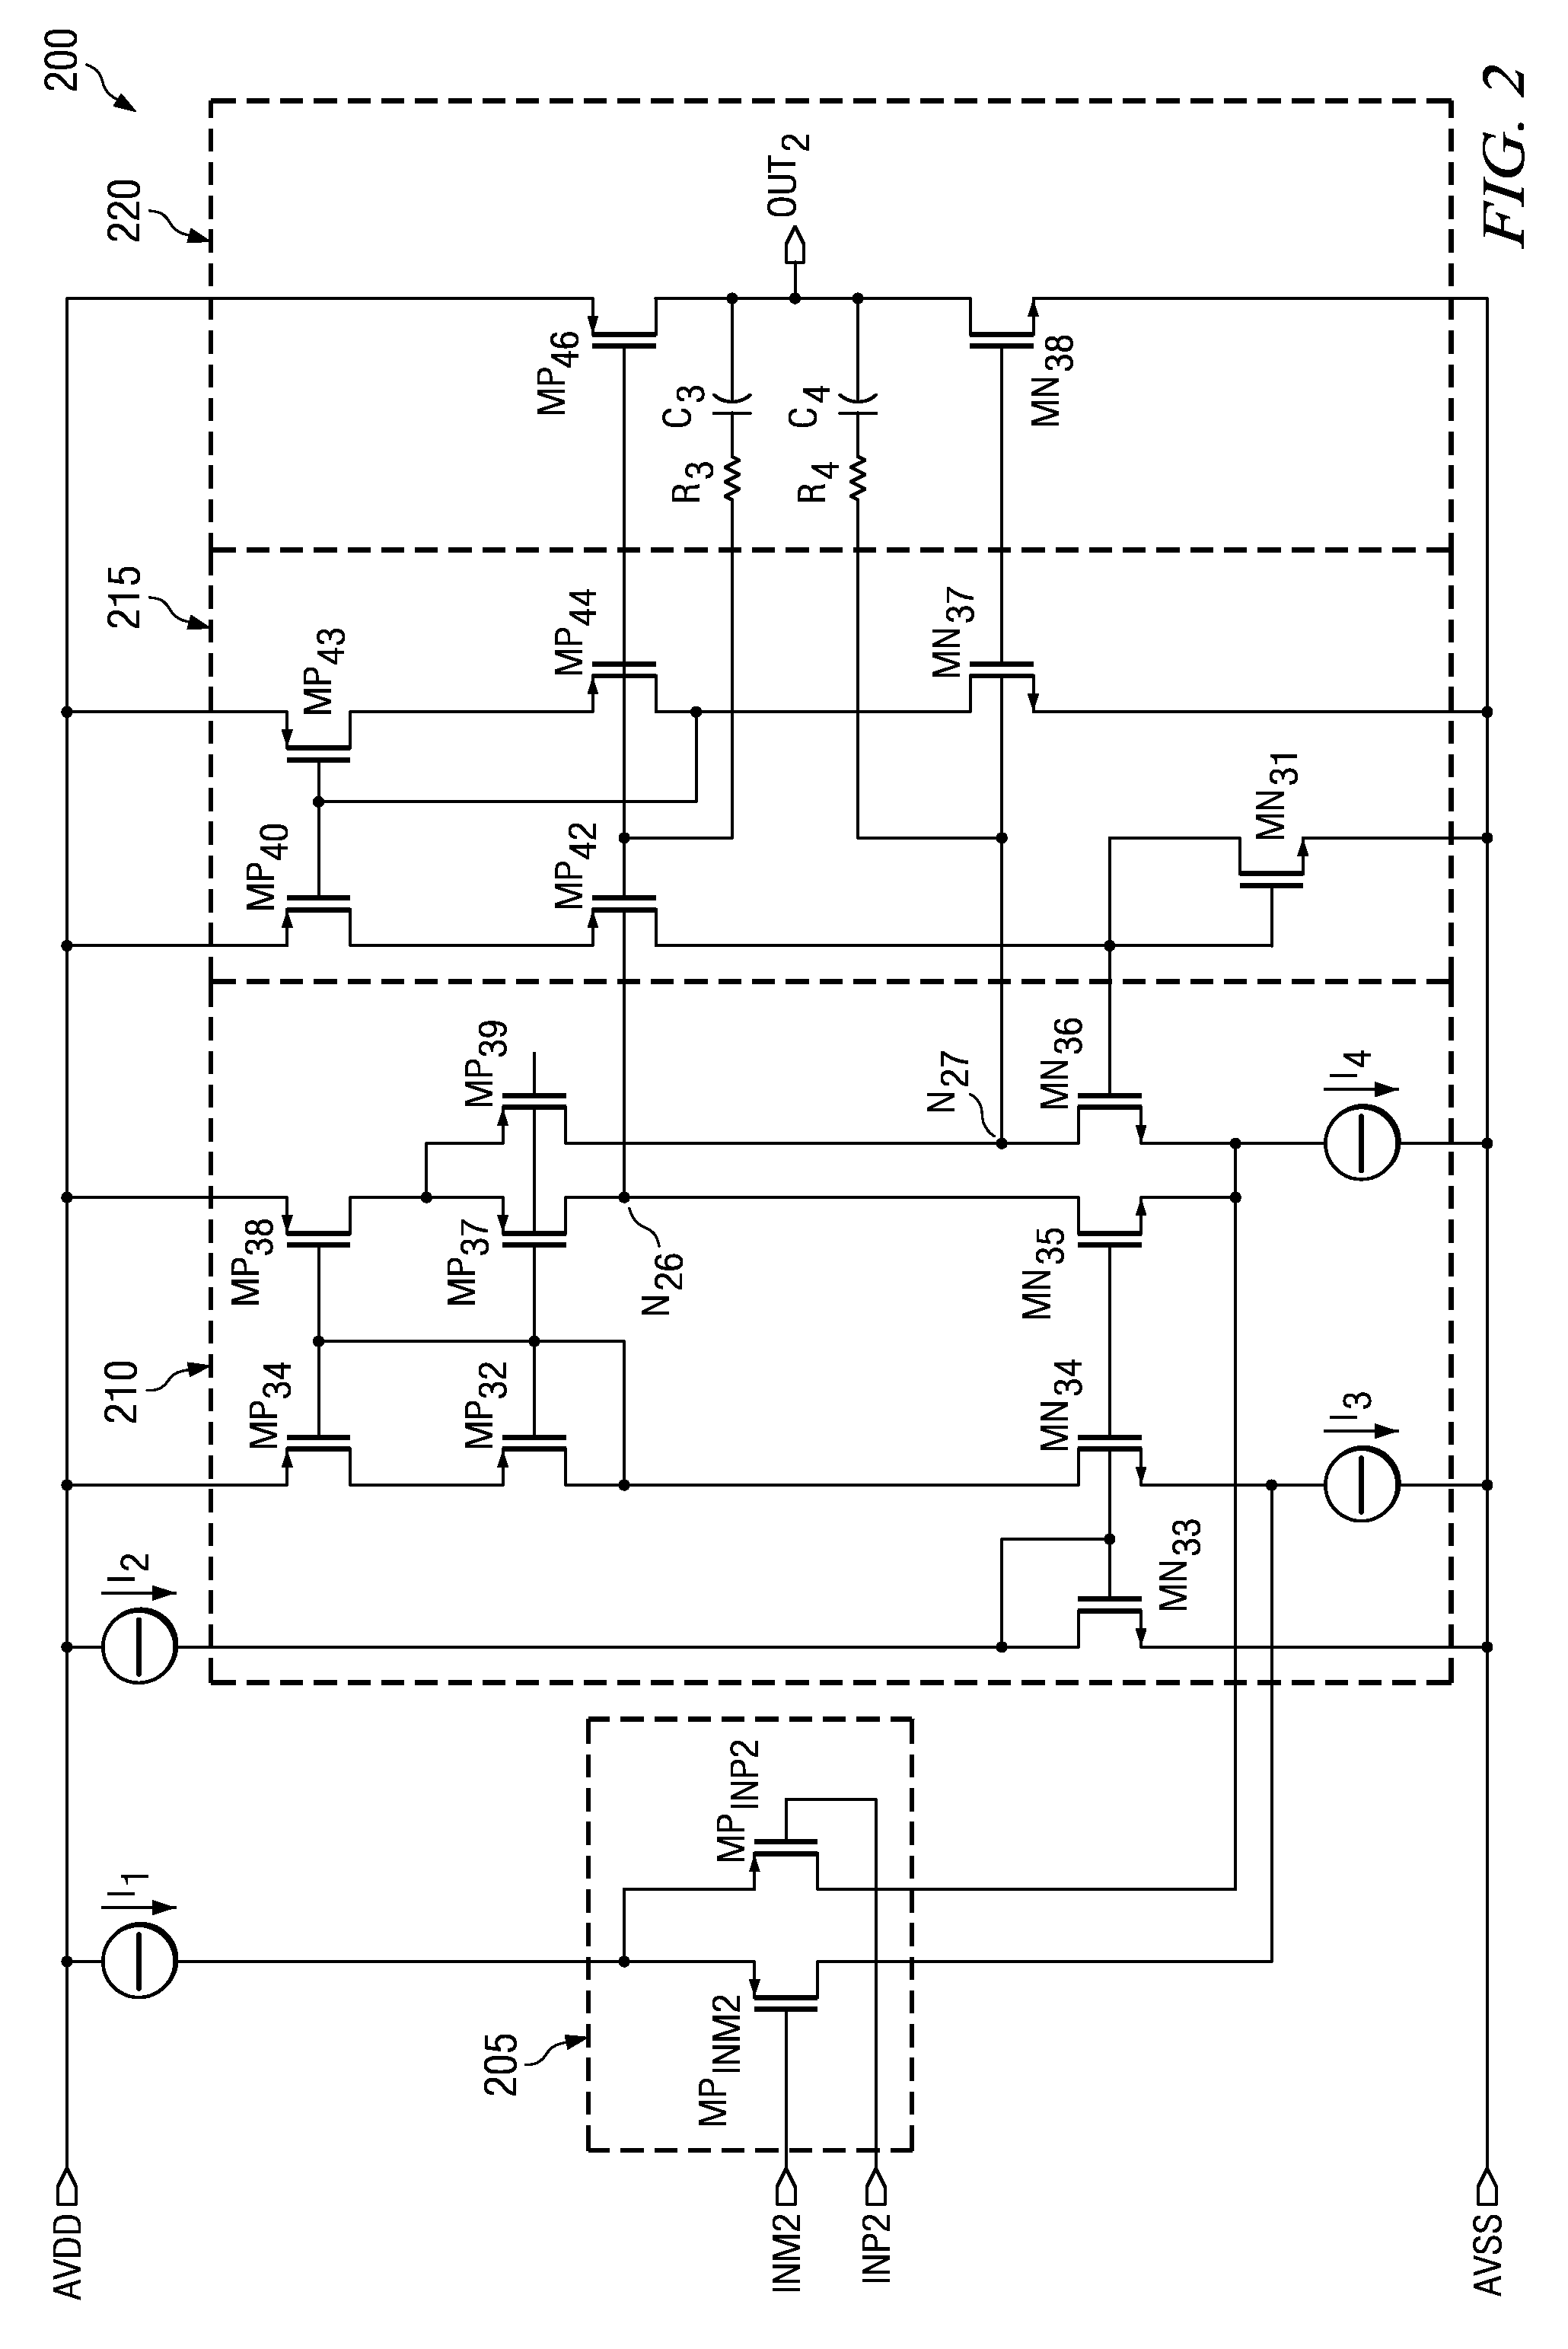 Low voltage amplifier having a class-AB control circuit